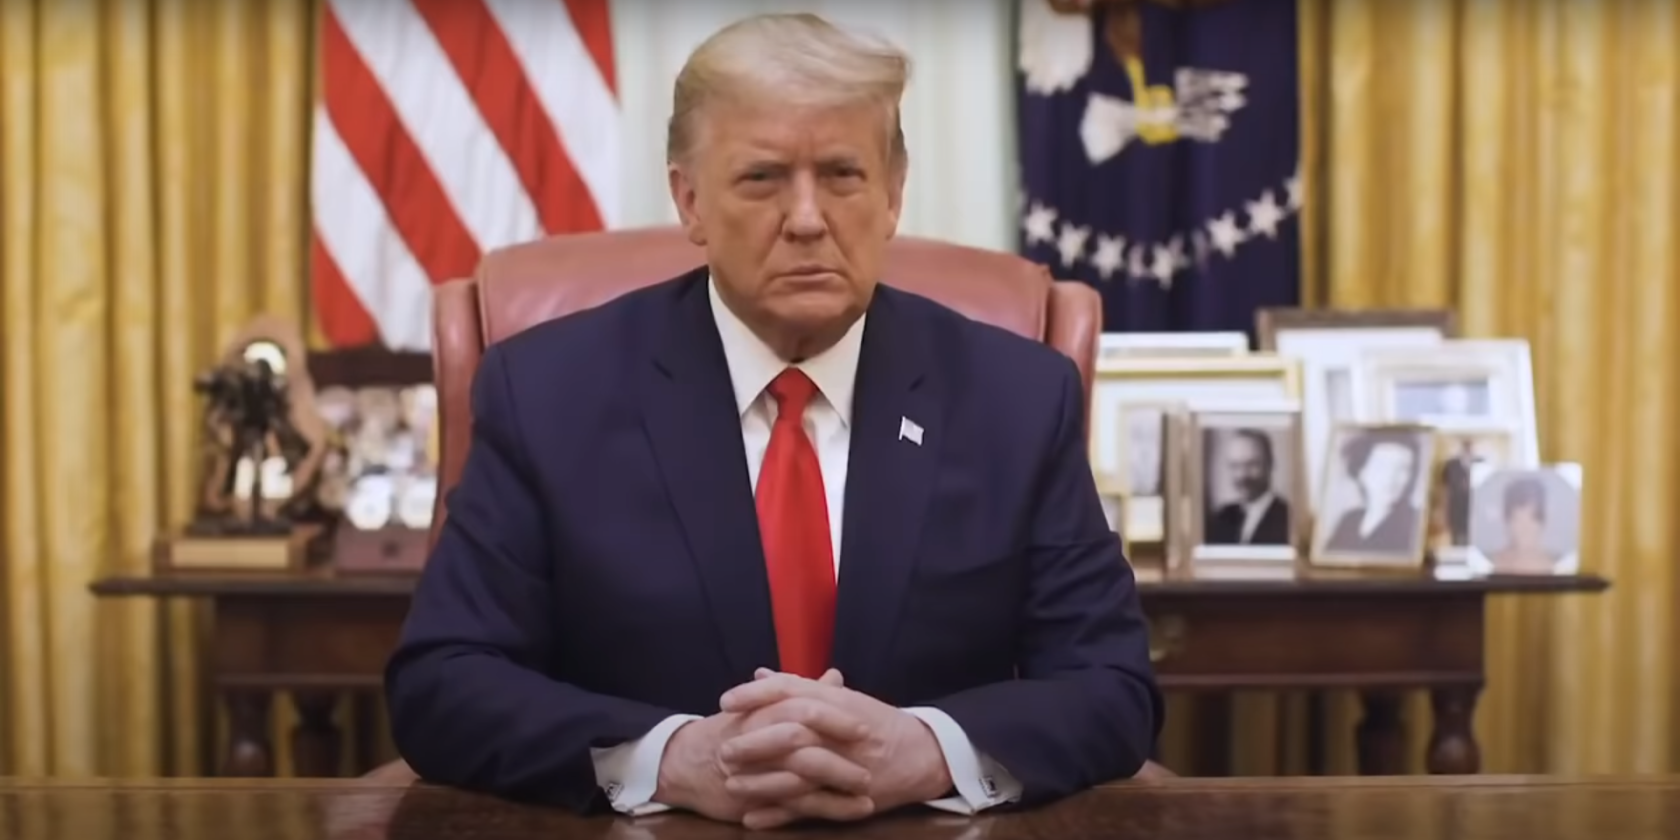 Trump sitting at a desk